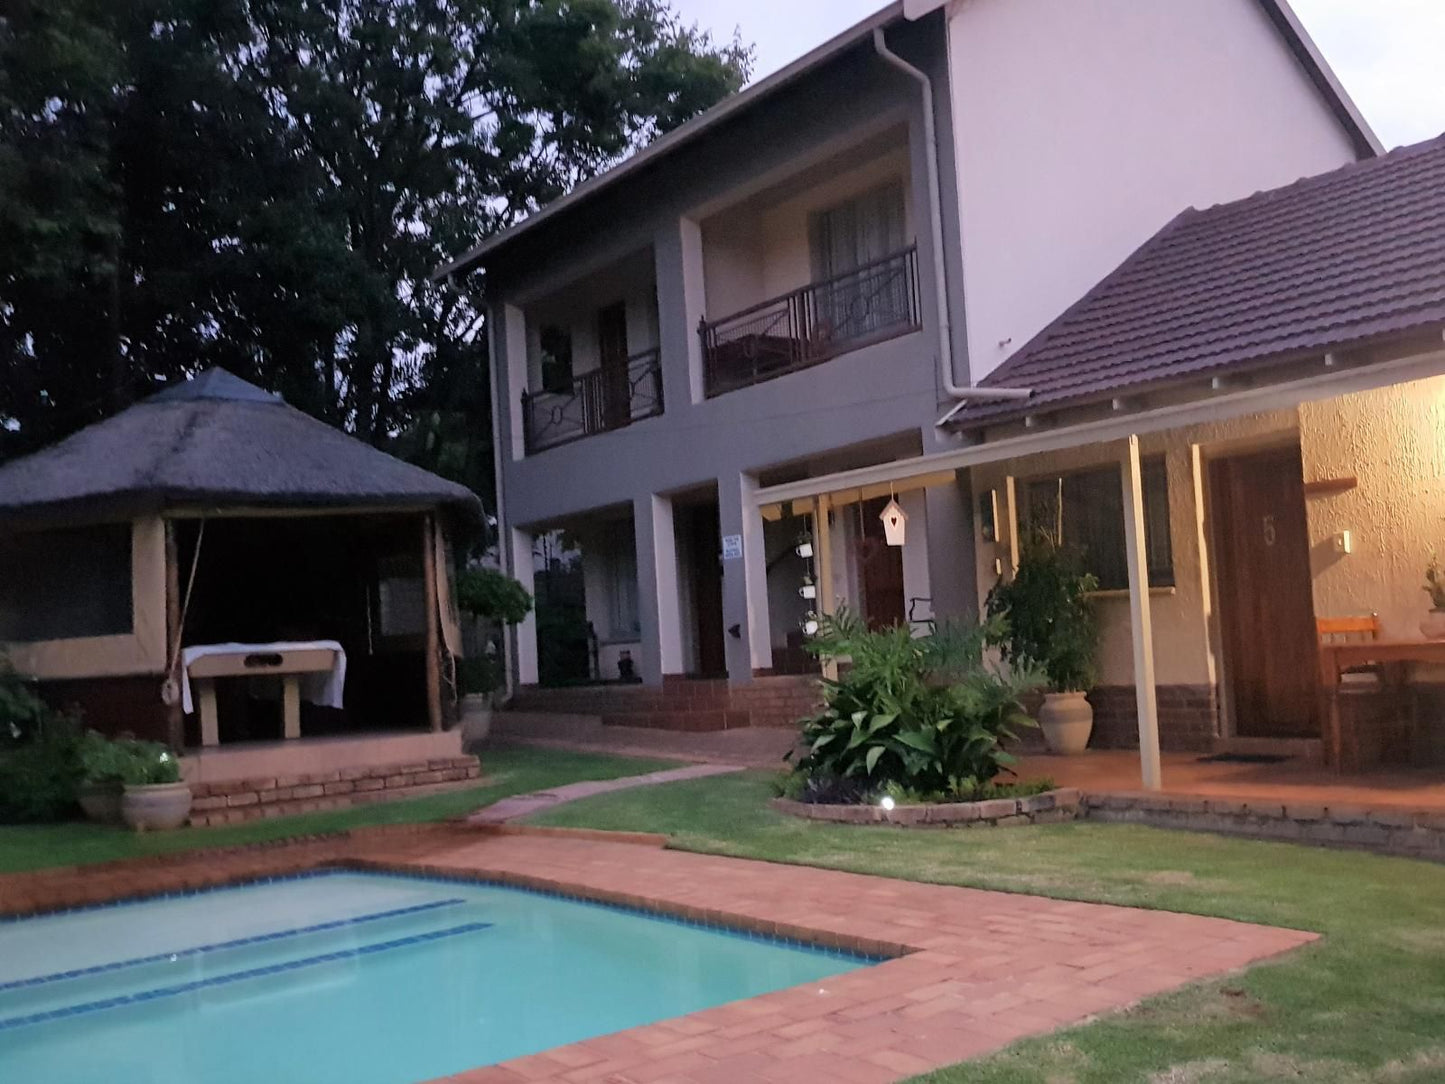 Aandbloem Guest House Eldoraigne Centurion Gauteng South Africa House, Building, Architecture, Swimming Pool